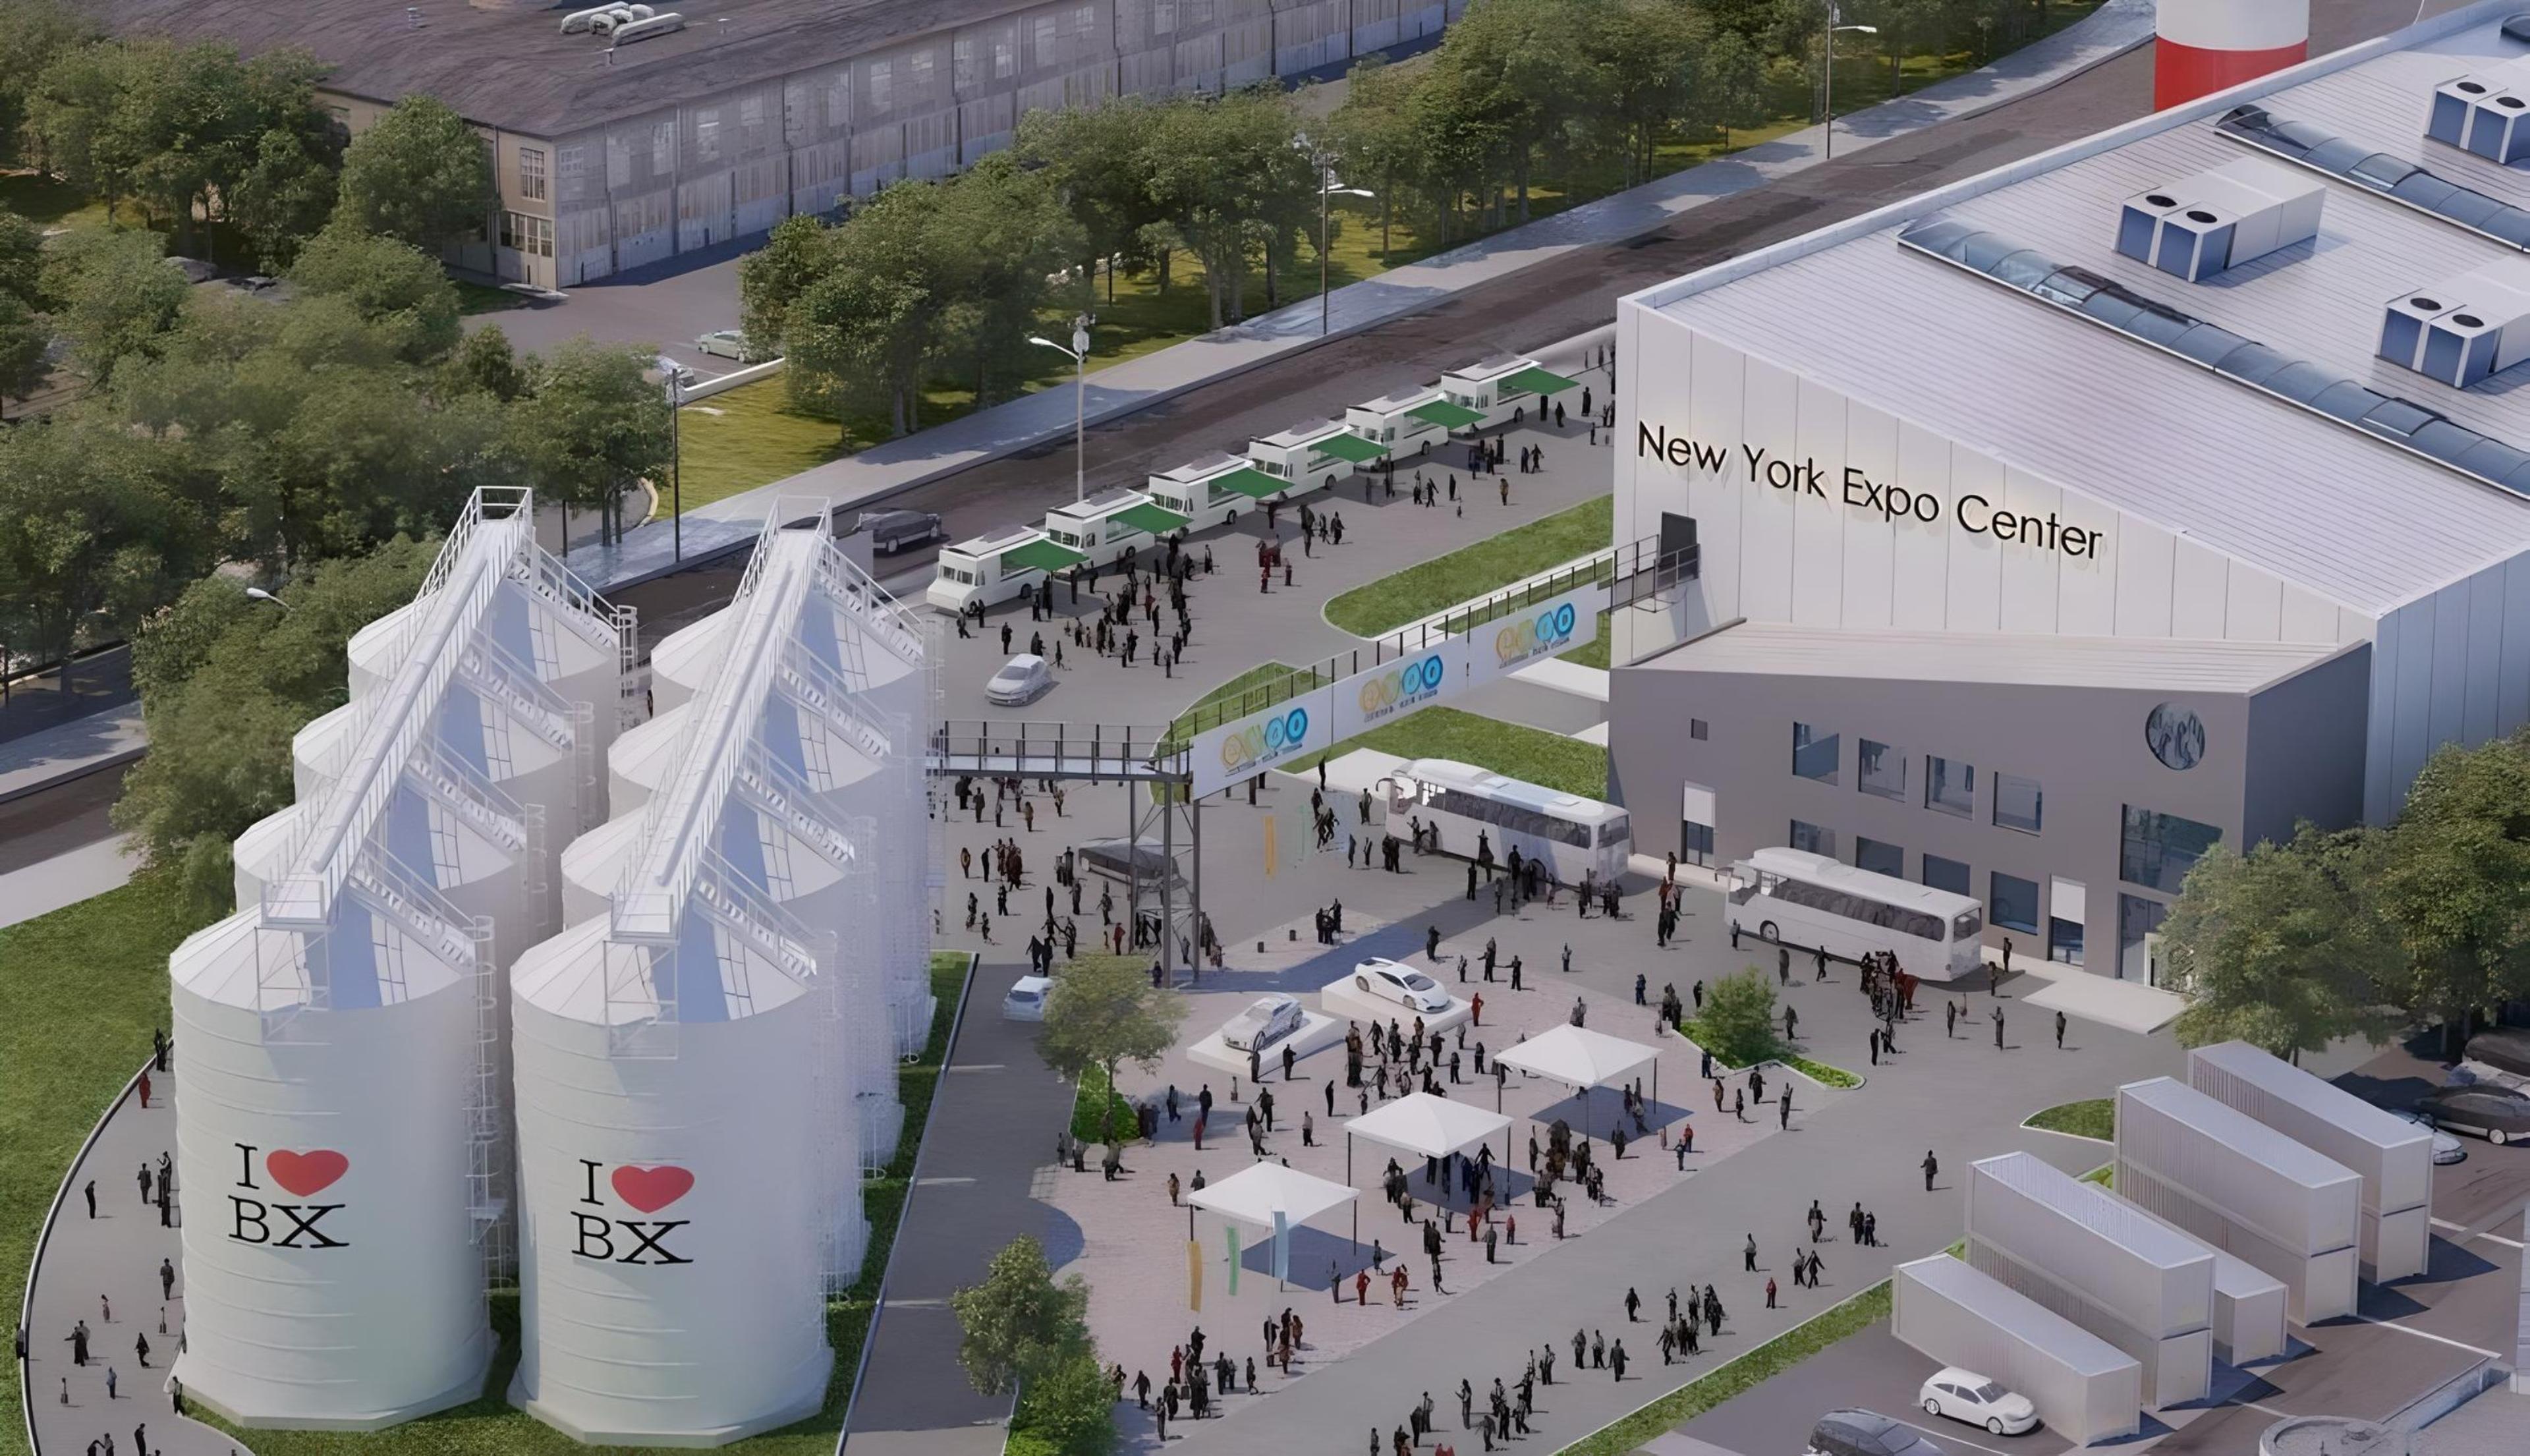 The New York Expo Center